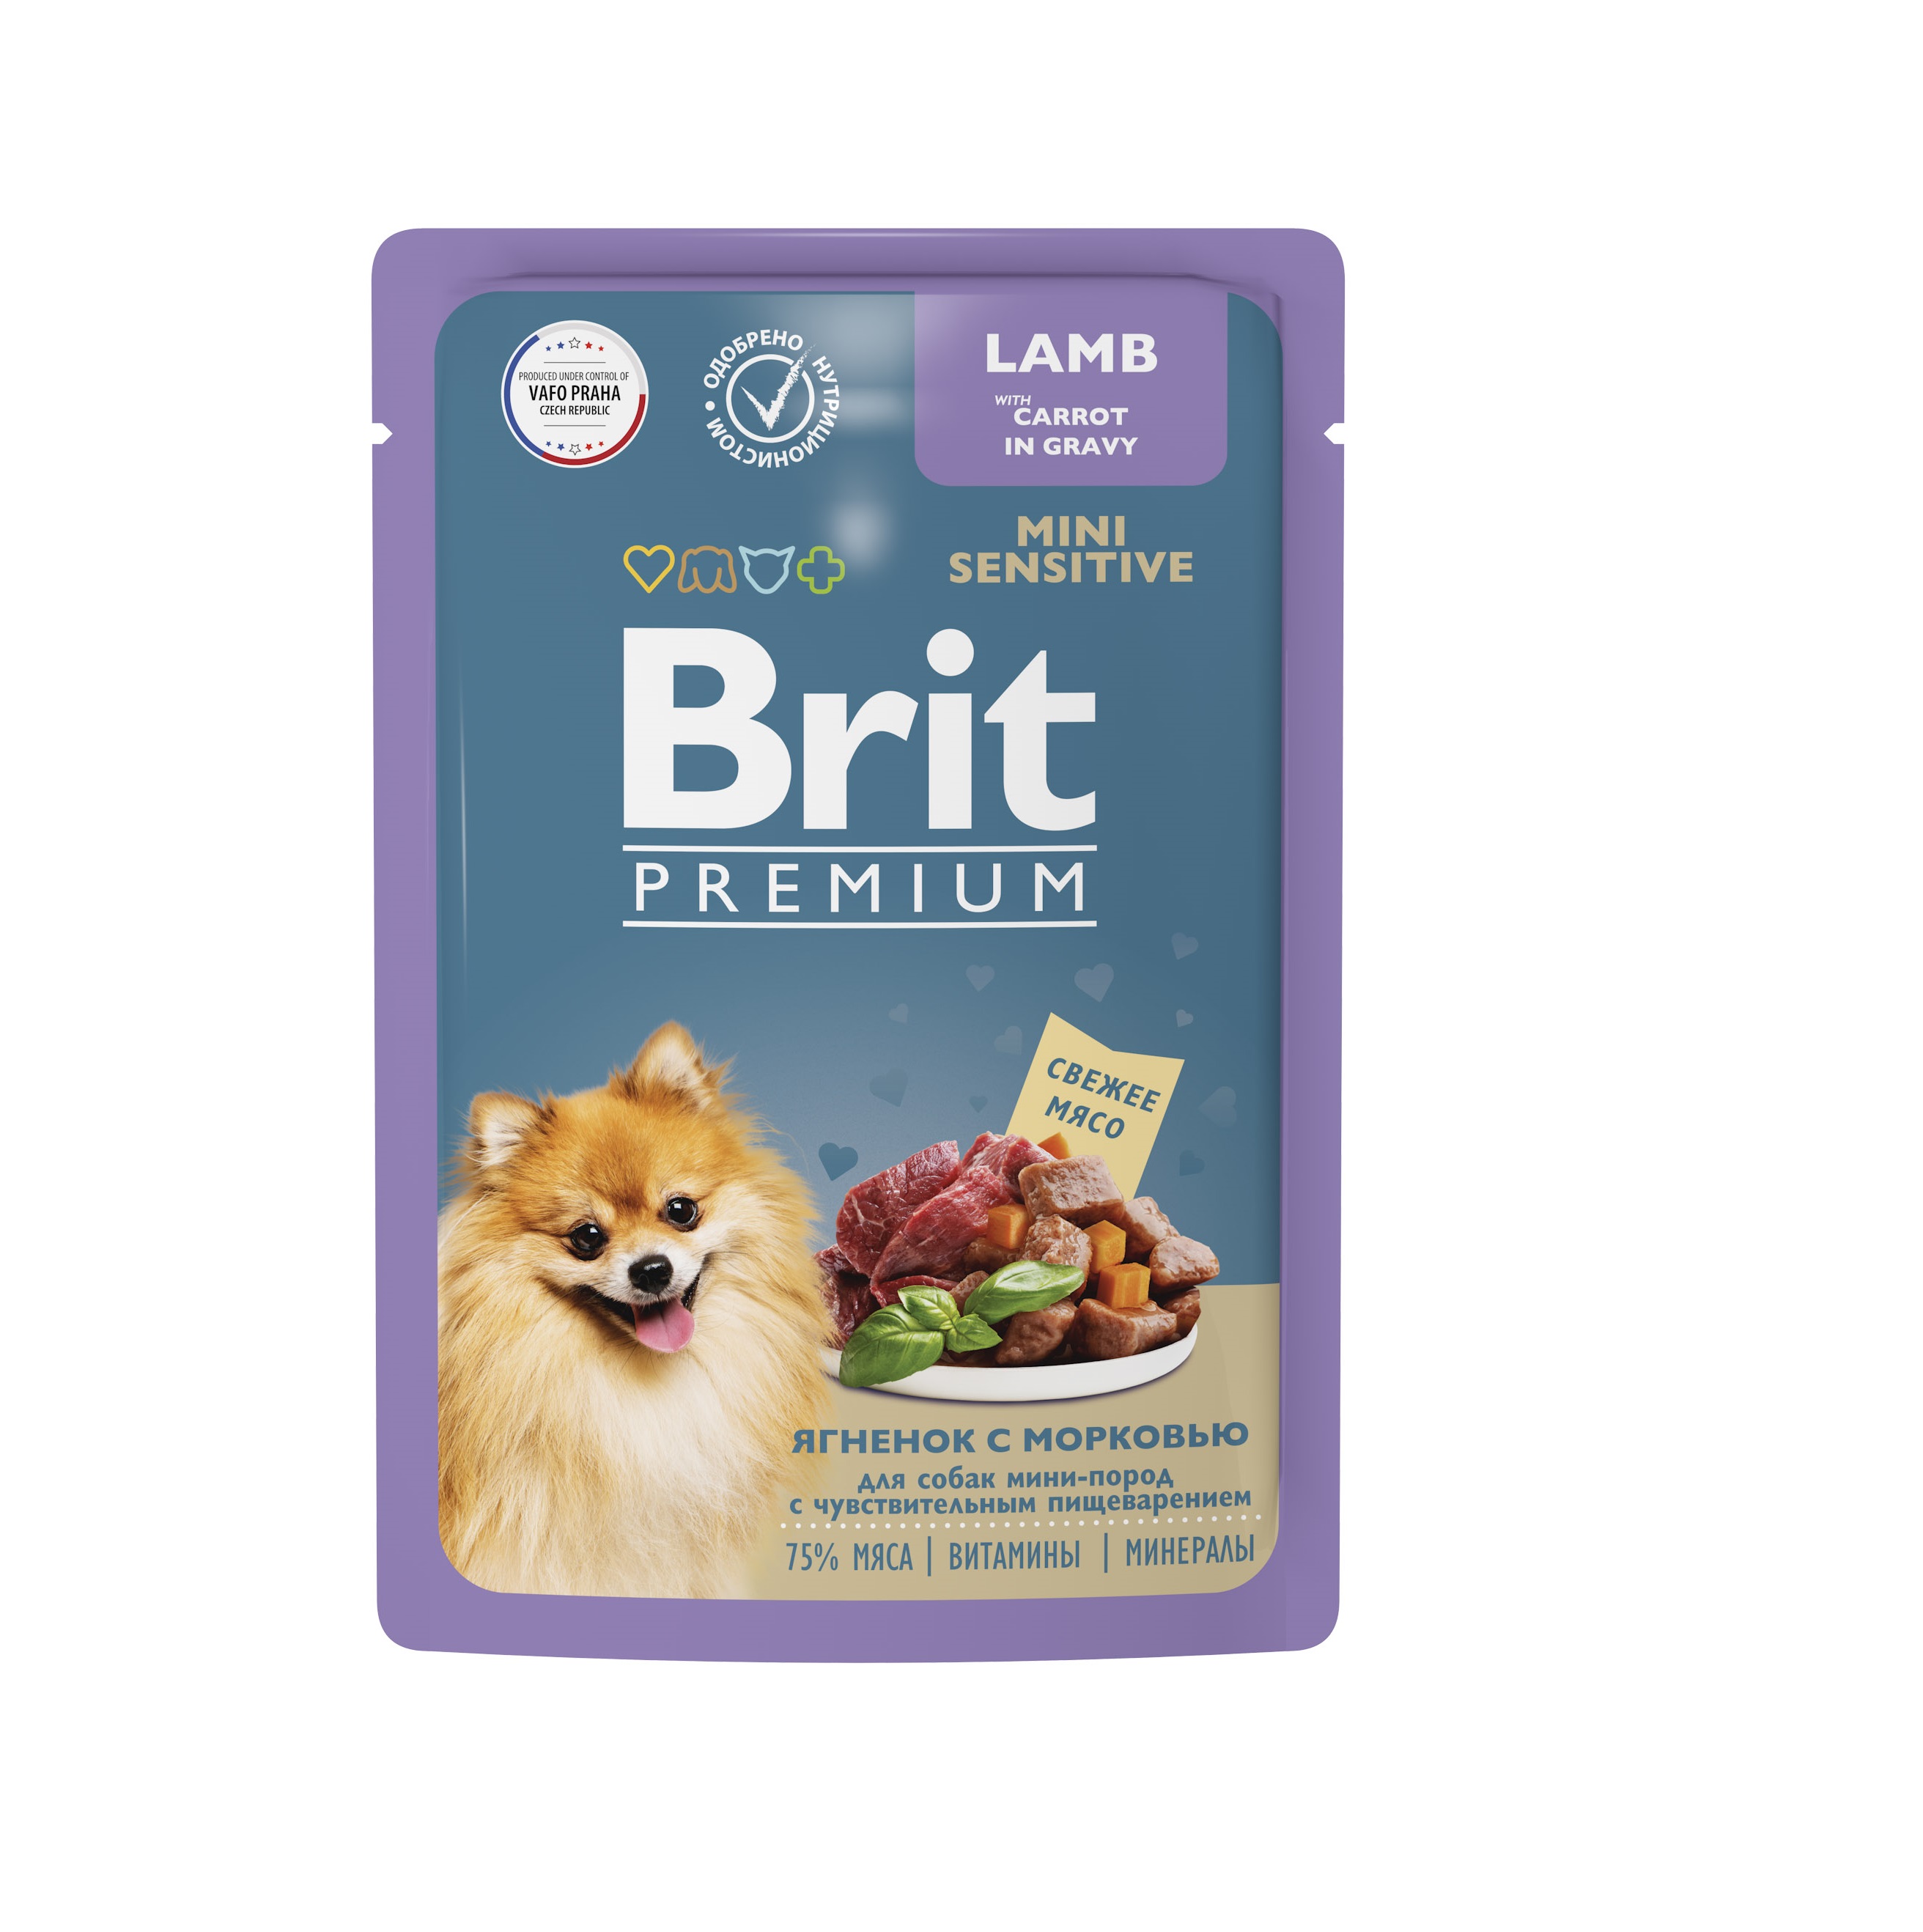 Брит 85гр - Ягненок/Морковь - Соус - для Собак Мини Сенситив (Brit Premium by Nature) 1 кор = 14шт